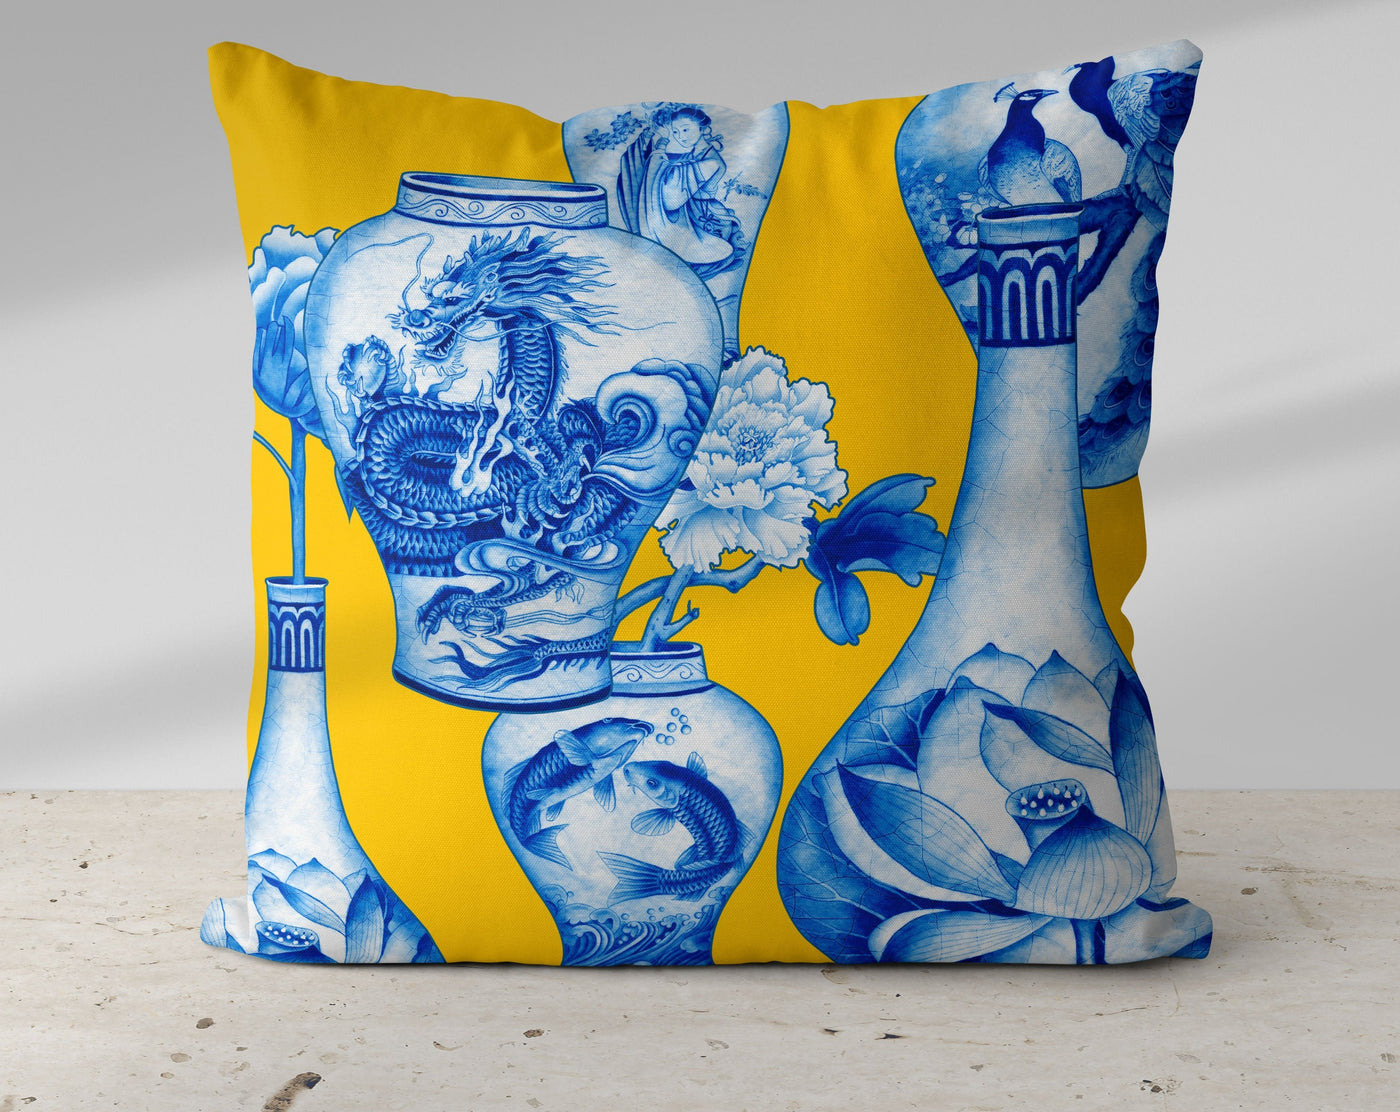 Ming Chinoiserie Chinese Blue Vases on Yellow Pillow Throw - Cush Potato Pillows